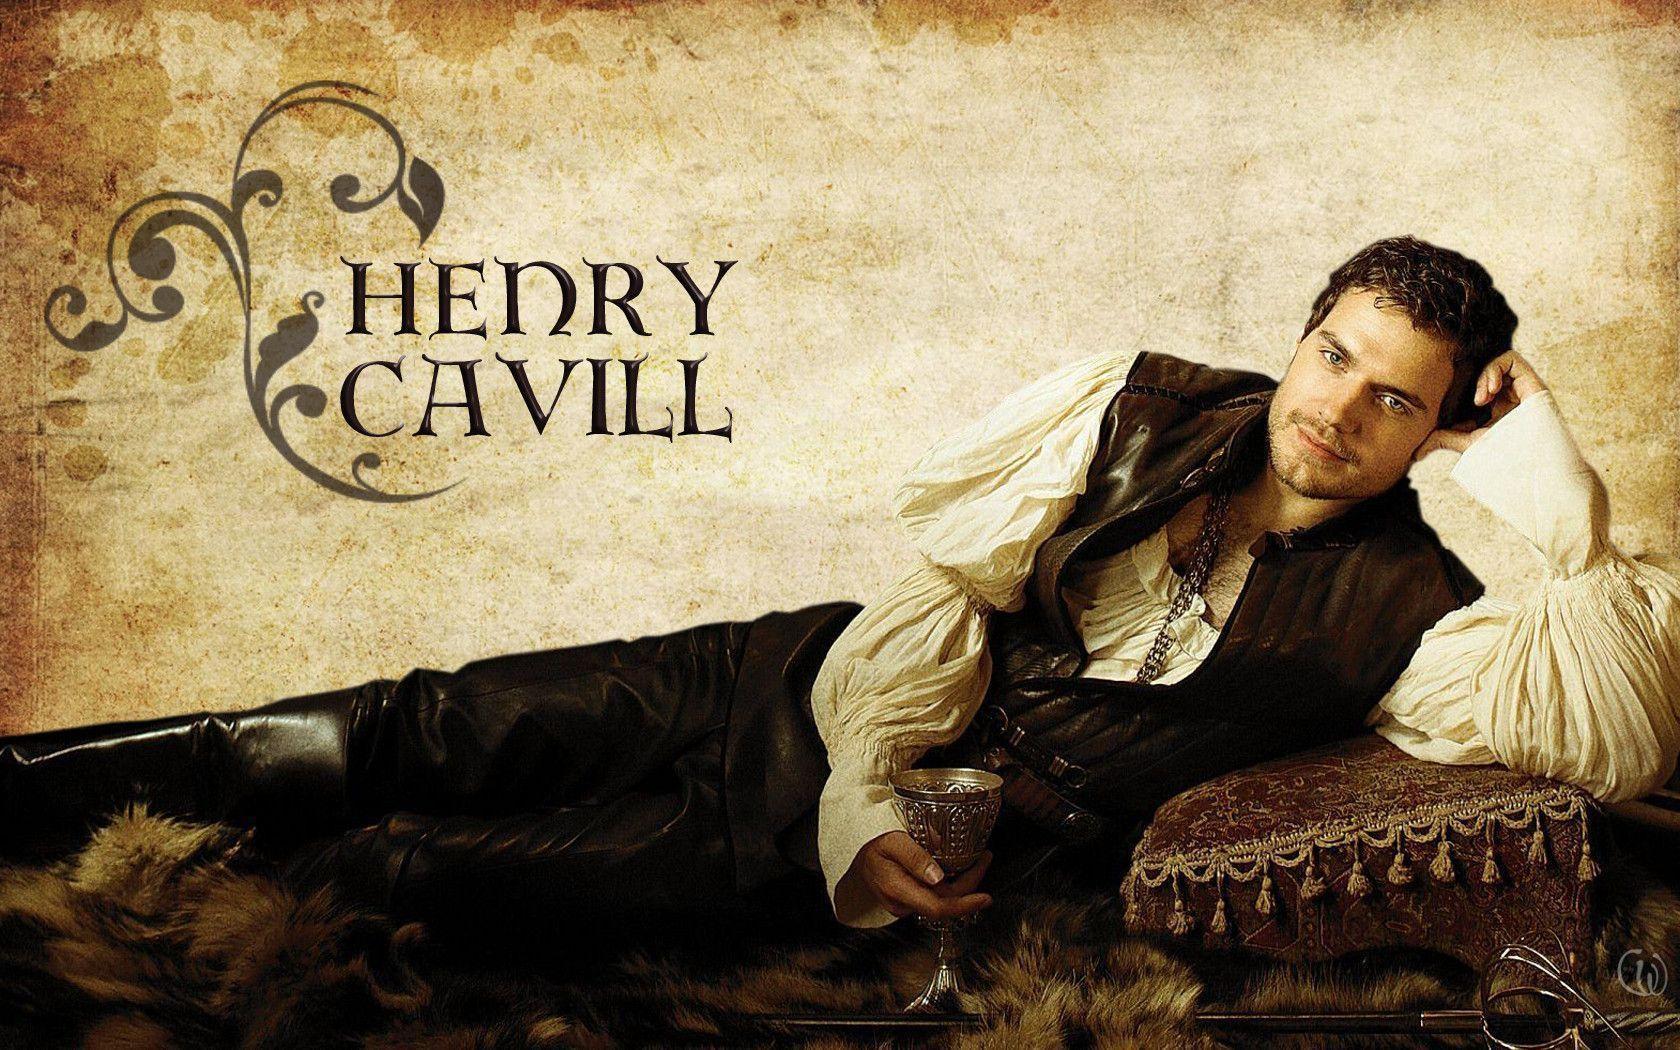 Henry Cavill Exclusive HD Wallpaper. Download Wallpaper